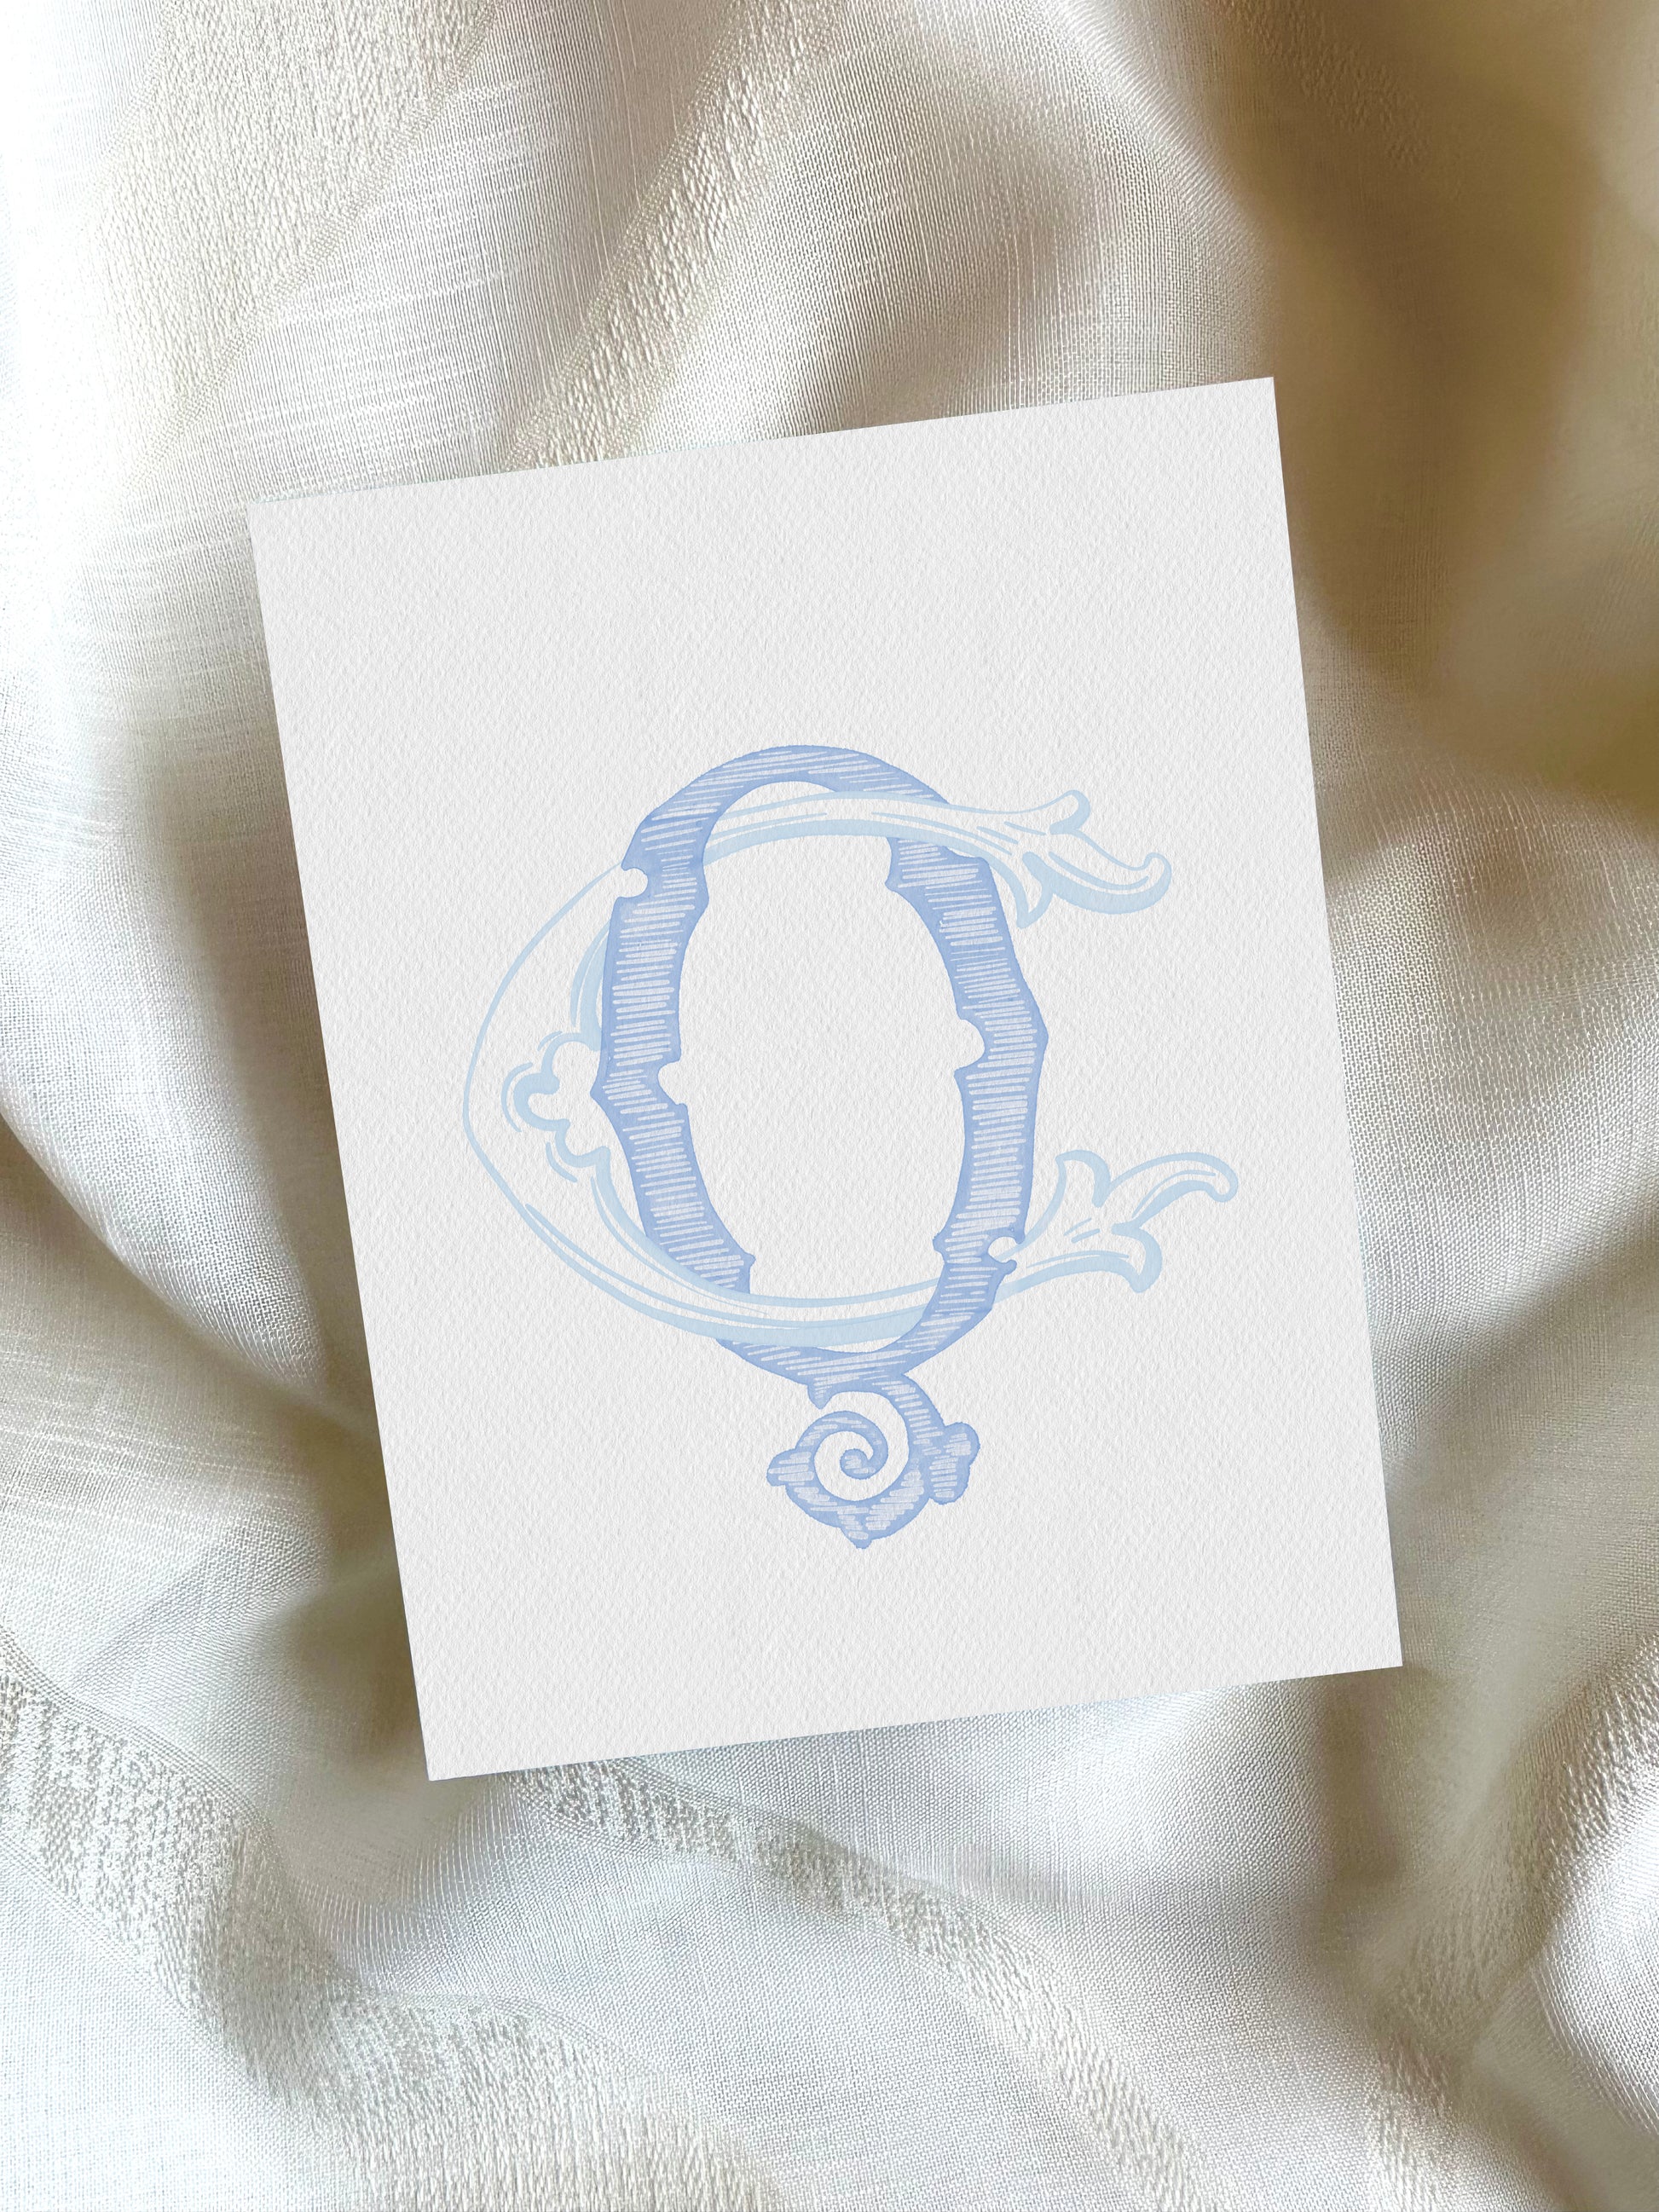 2 Letter Monogram with Letters CQ QC | Digital Download - Wedding Monogram SVG, Personal Logo, Wedding Logo for Wedding Invitations The Wedding Crest Lab